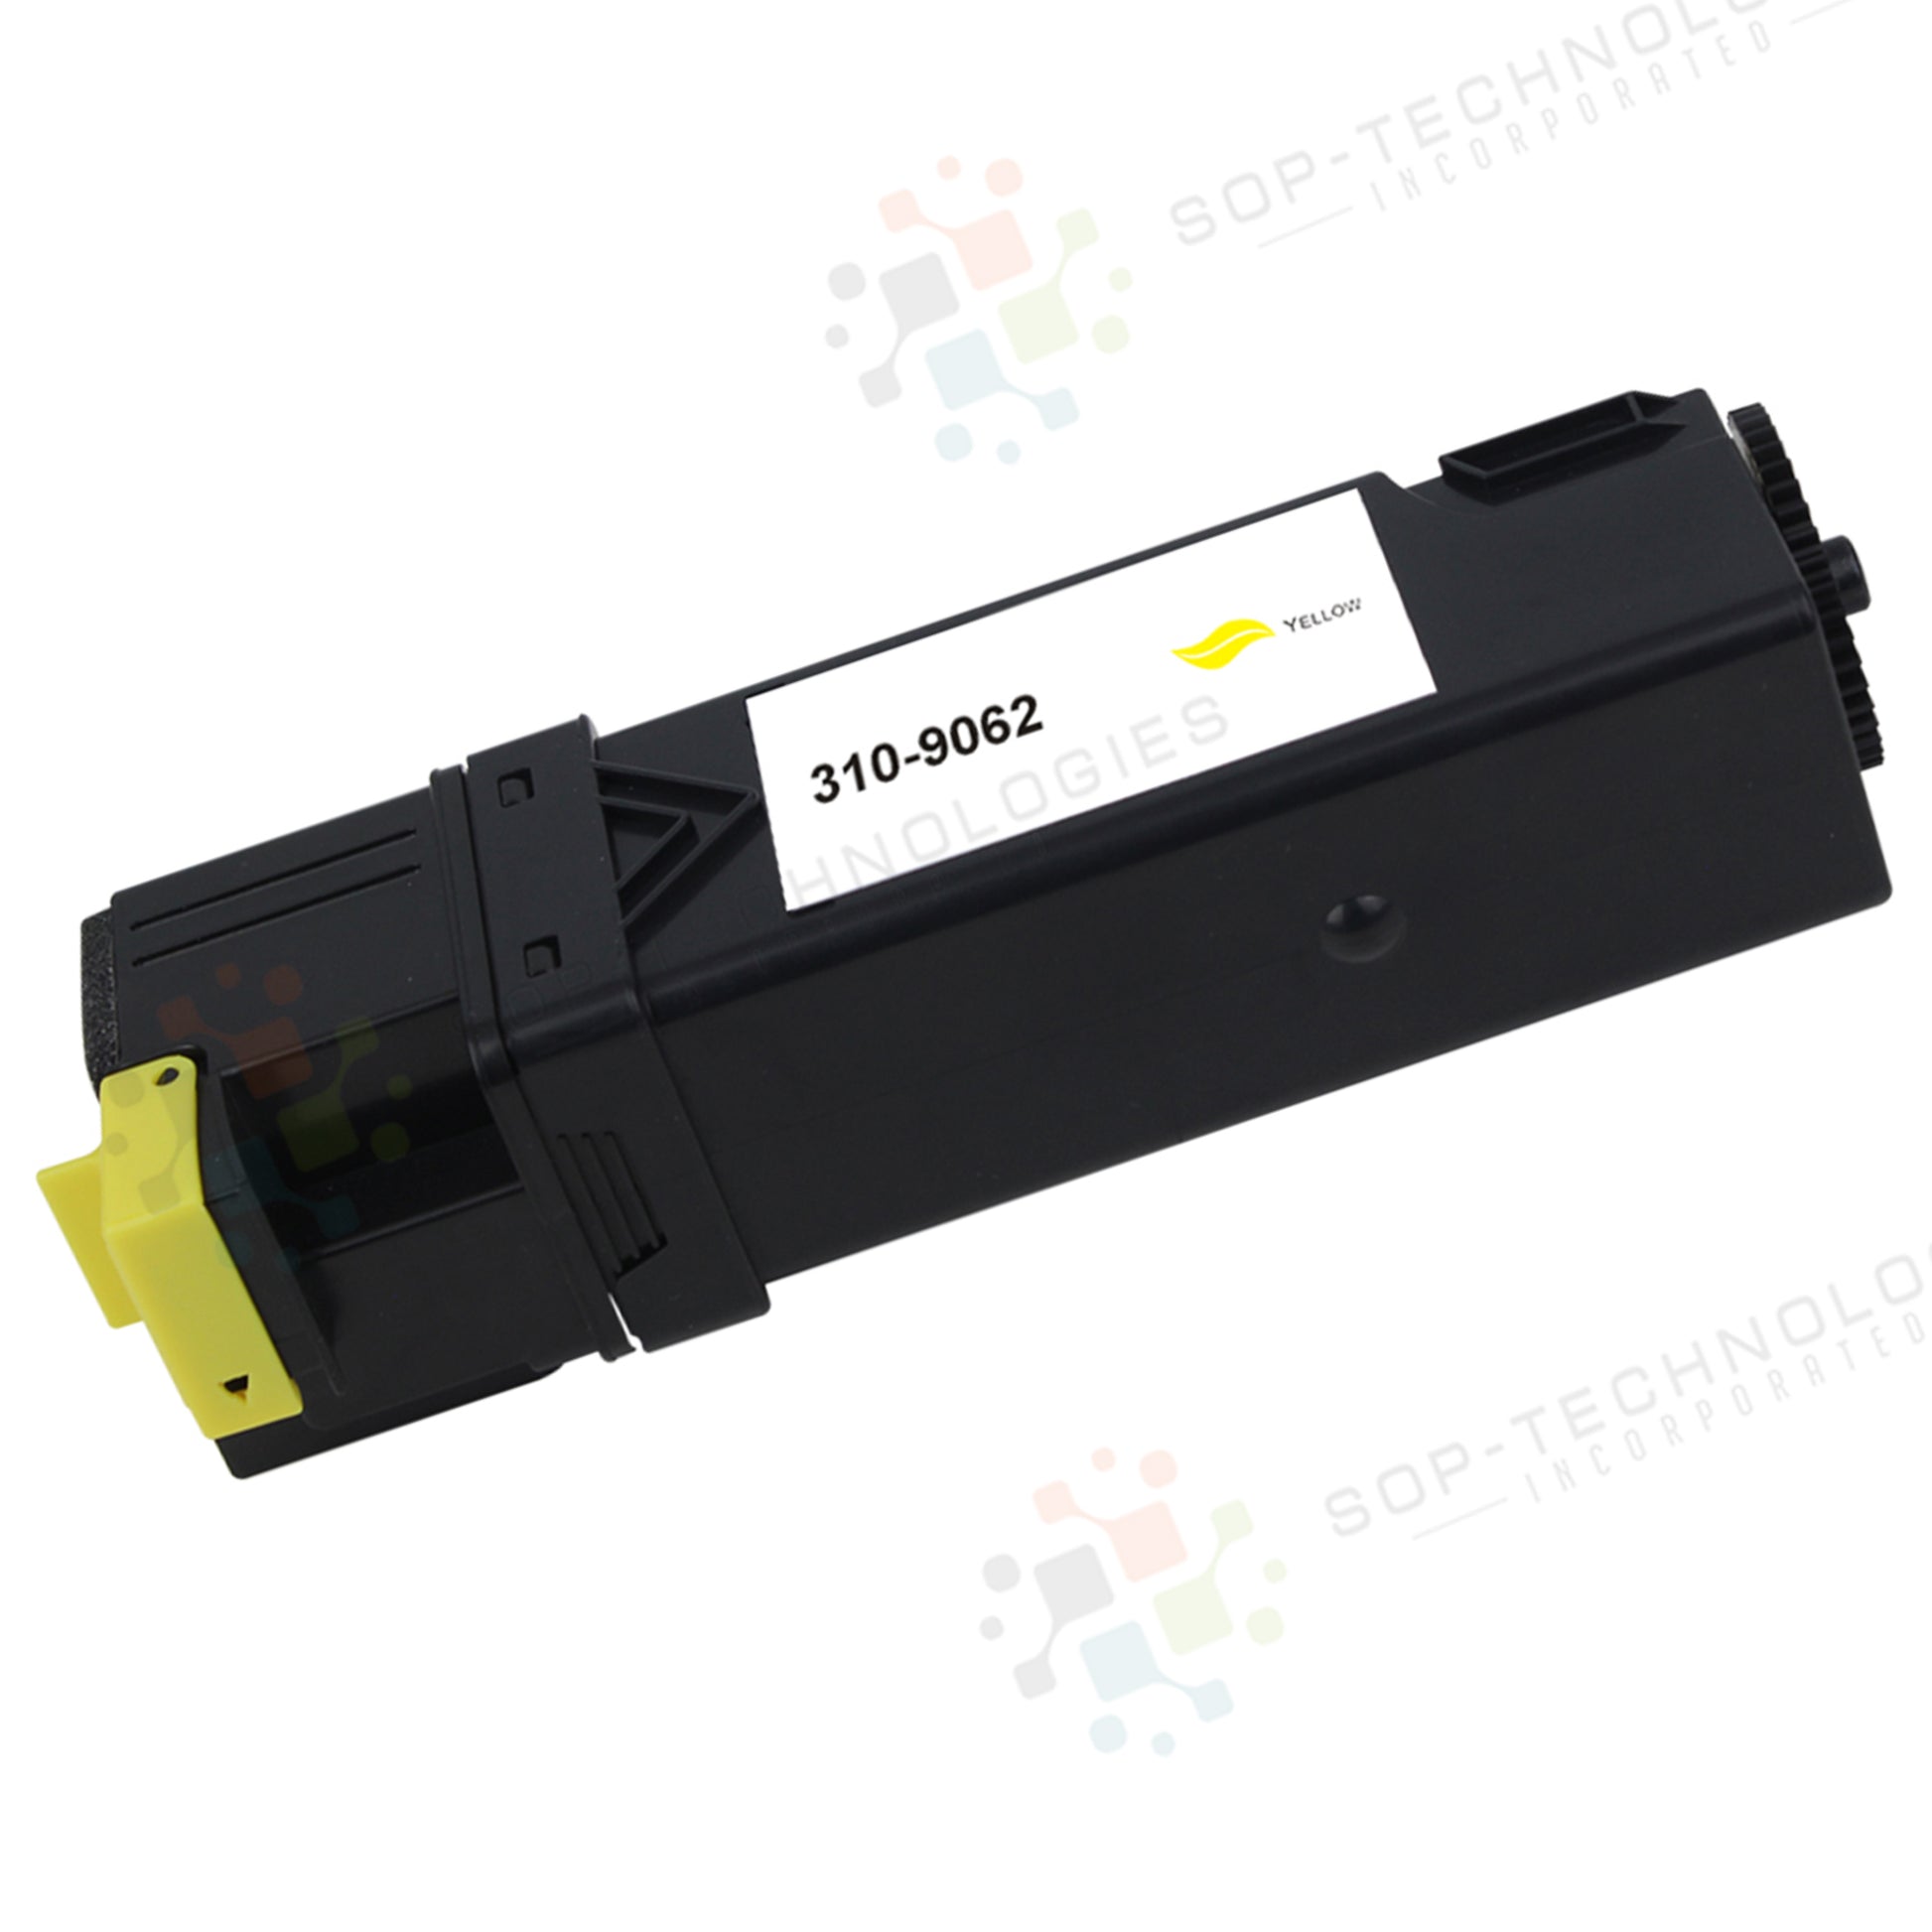 4 Pack Compatible Toner Cartridge for Dell Color Laser Printer1320 - SOP-TECHNOLOGIES, INC.